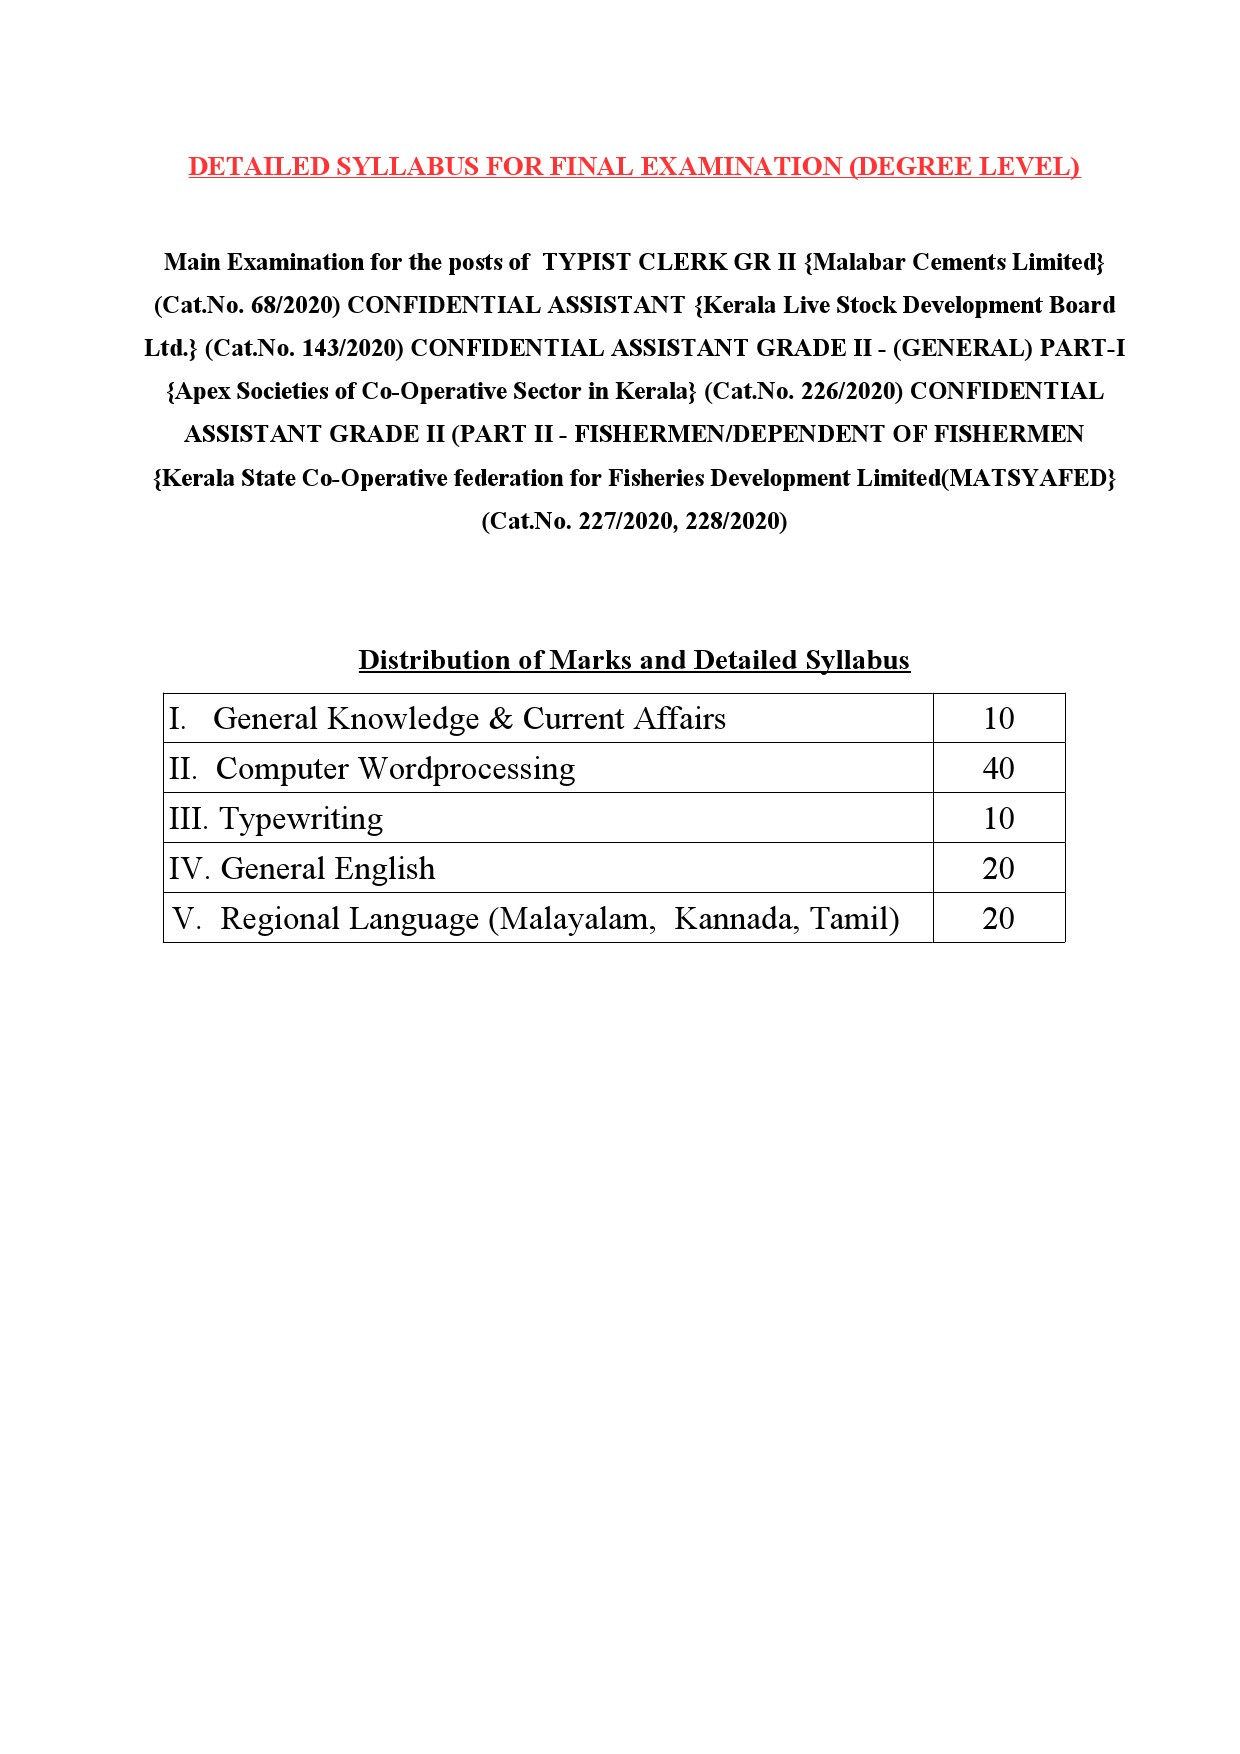 KPSC Degree Level Main Exam Syllabus Typist Clerk Grade II - Notification Image 1